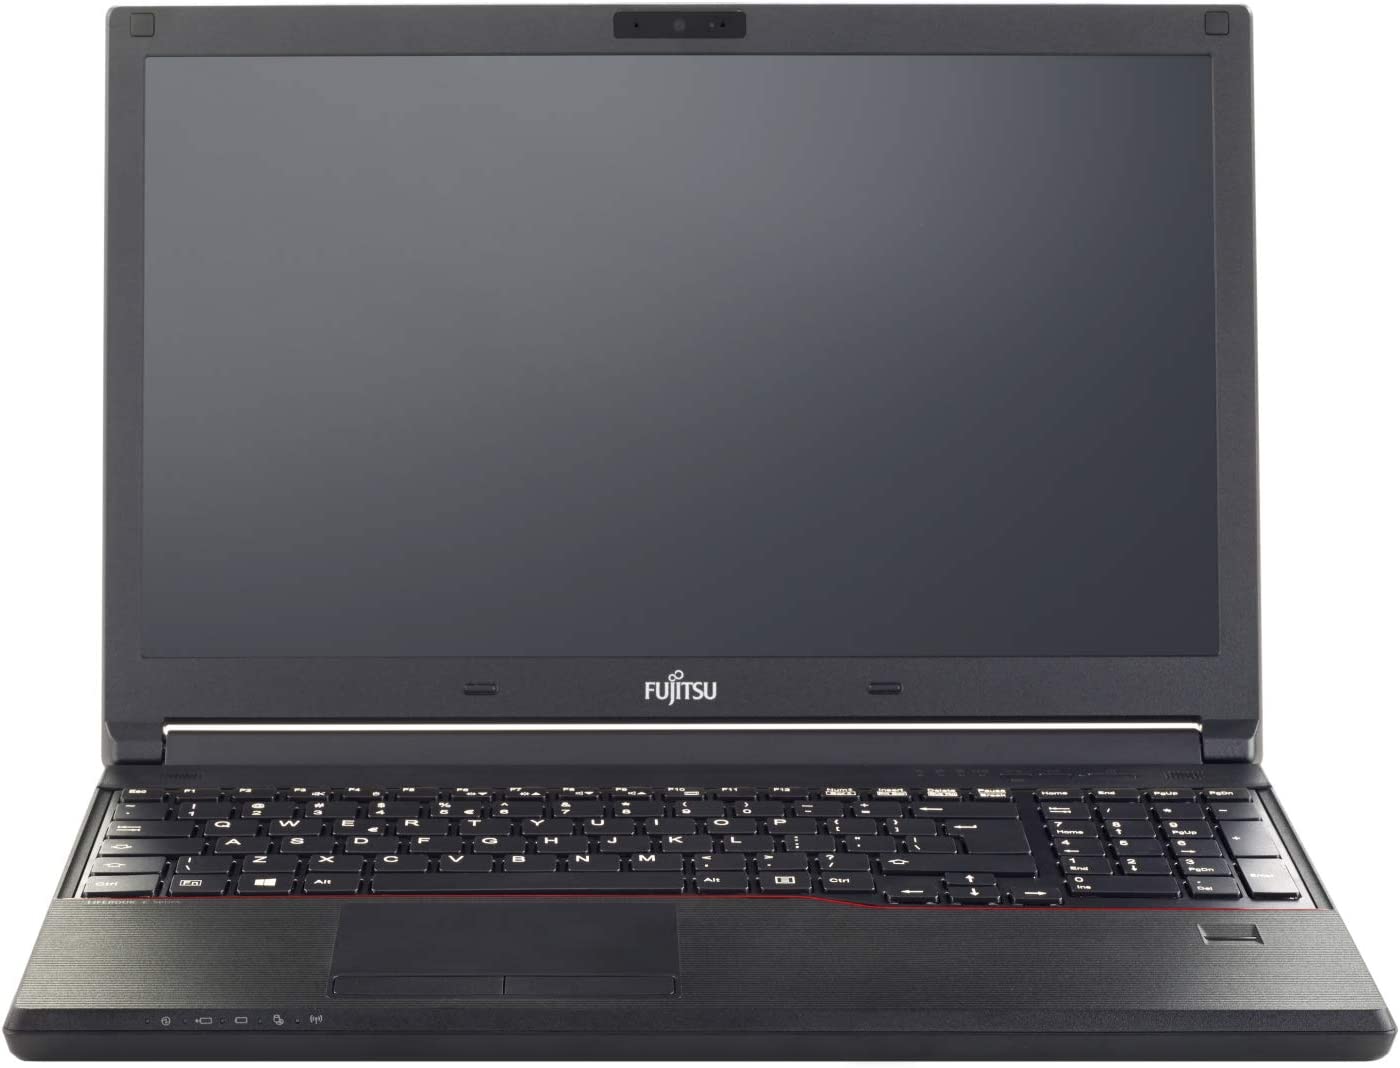 Fujitsu Lifebook E5411 35,6cm (14,1") FHD TFT   